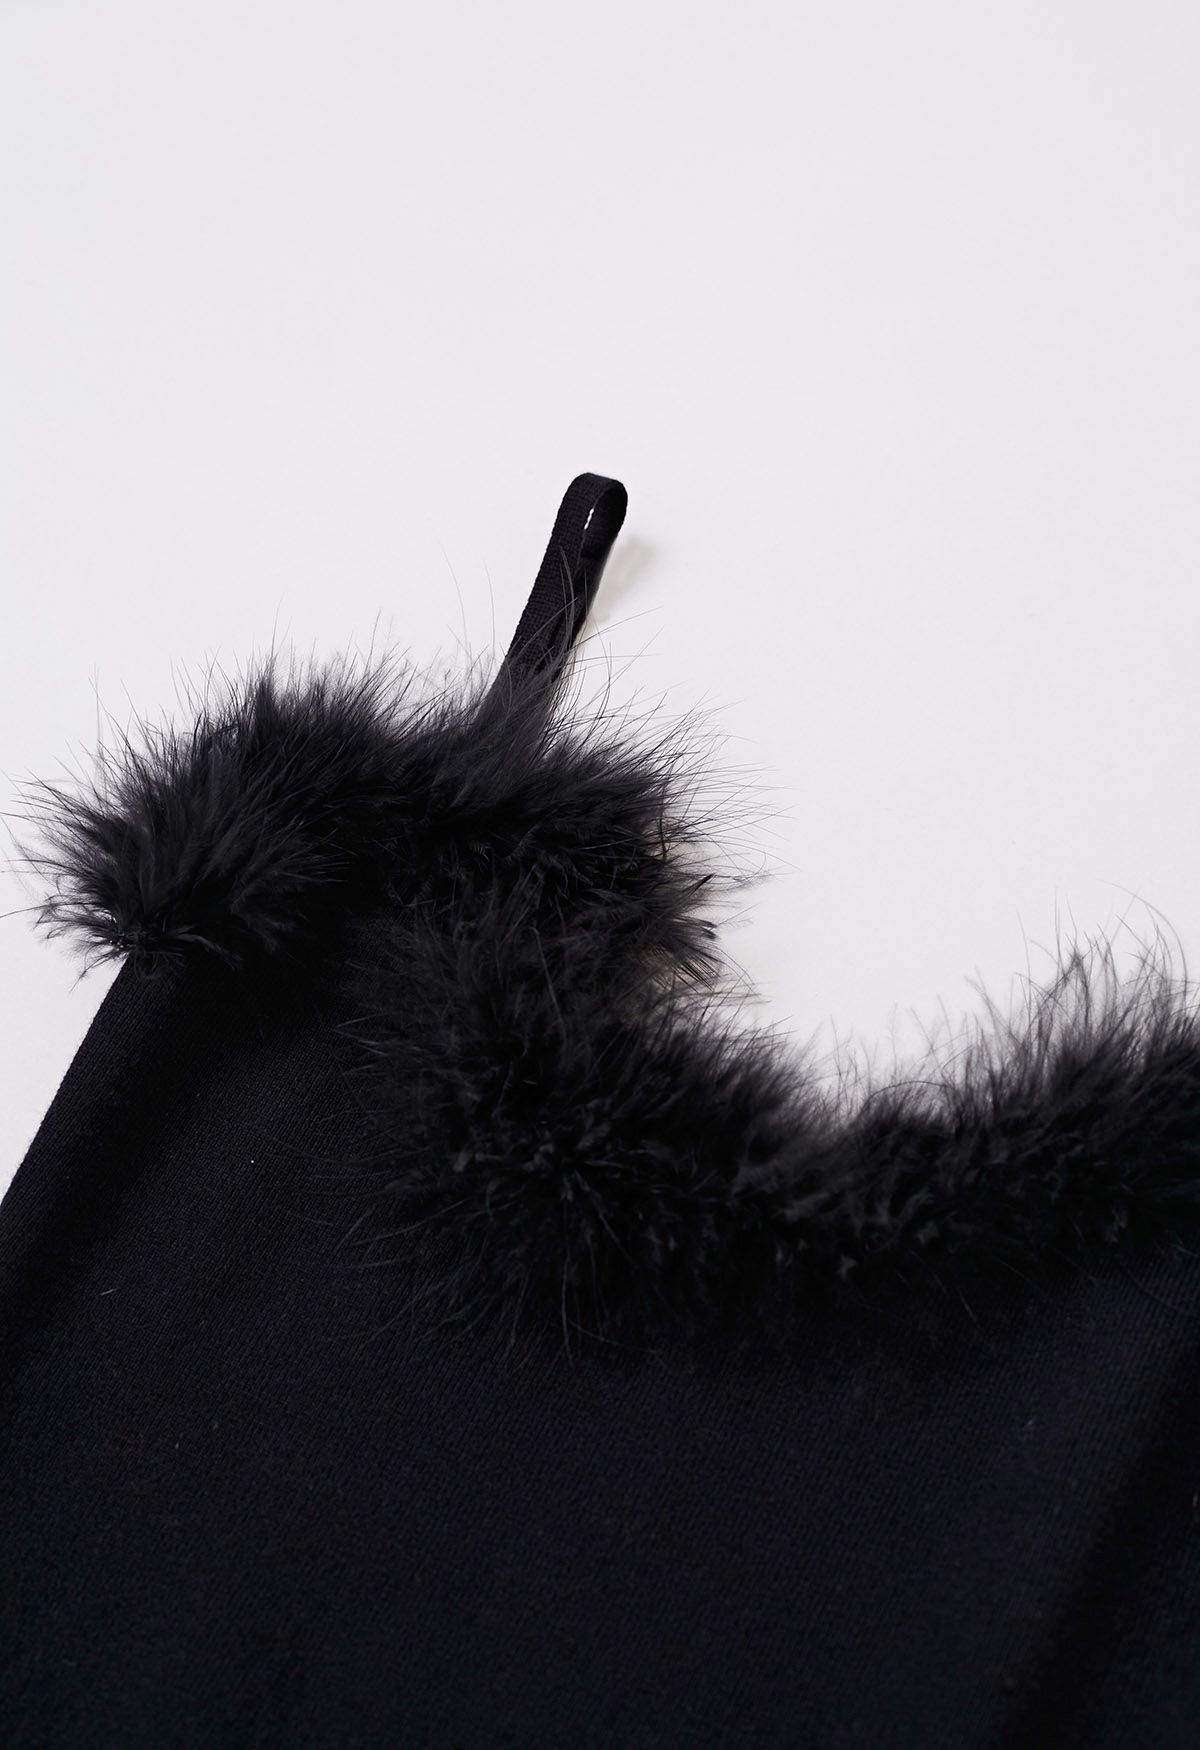 Detachable Feather Trim Knit Cami Dress in Black